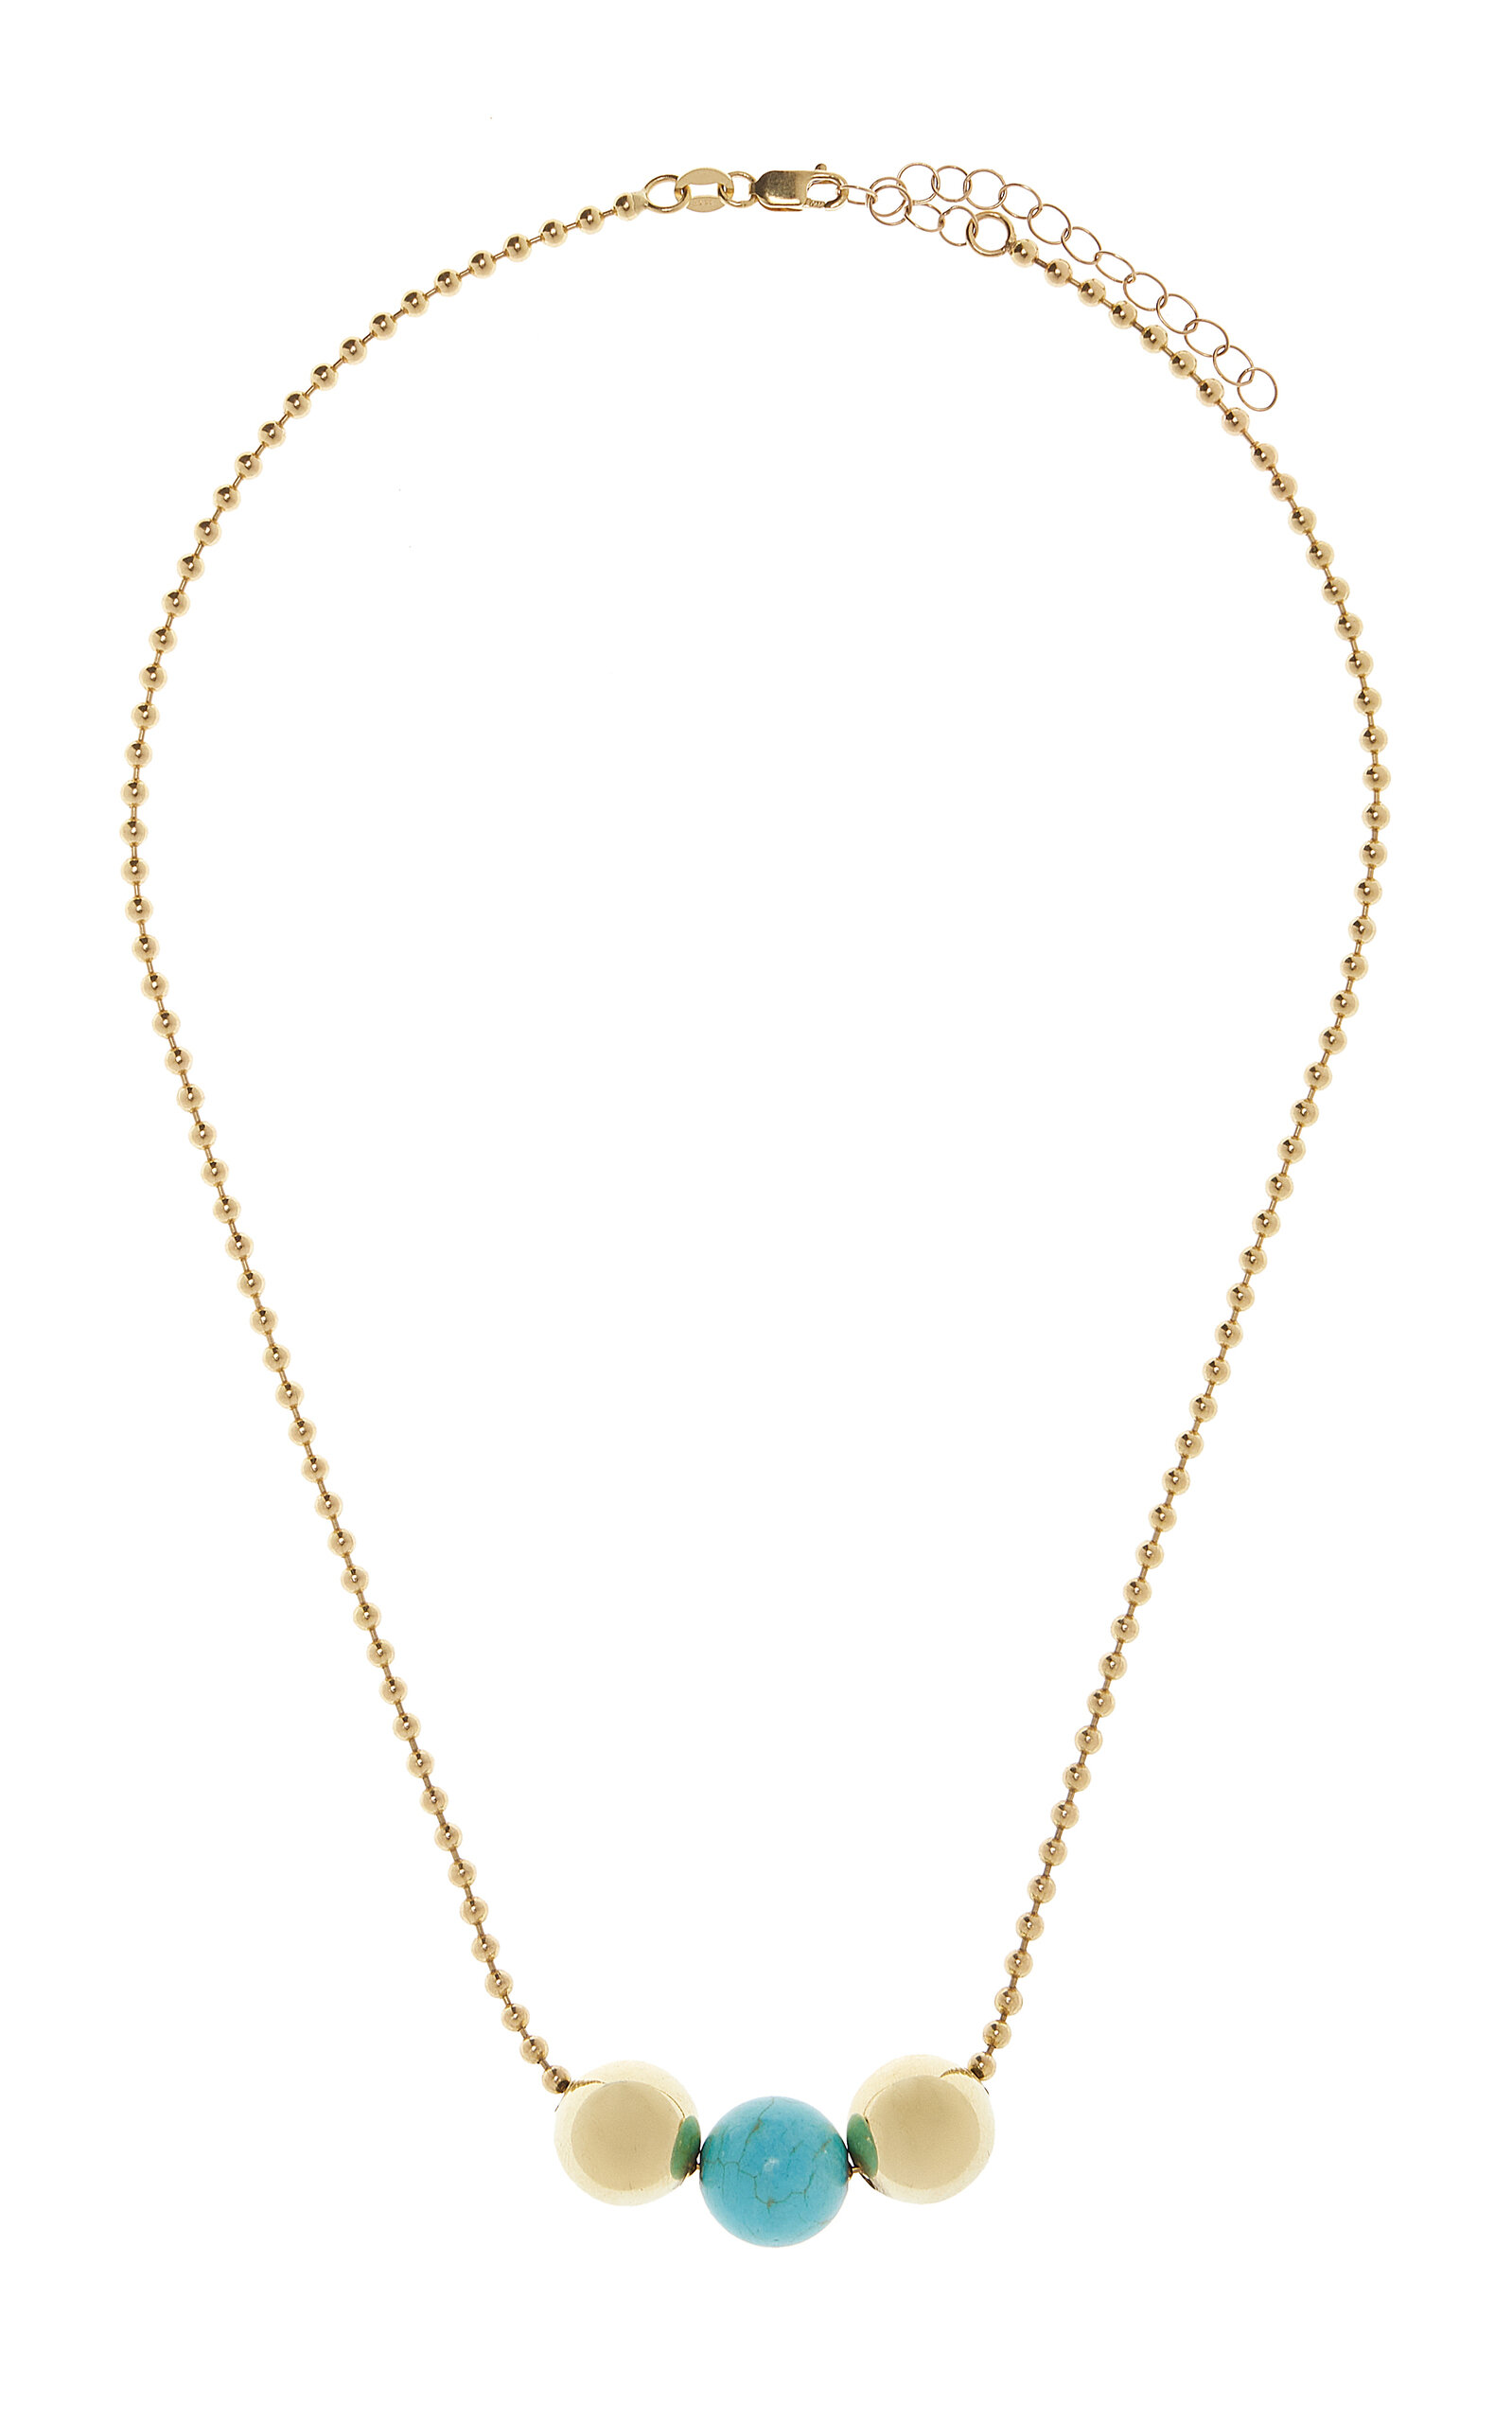 Jenna Blake Women's 18K Gold Turquoise Three Ball Chain Necklace